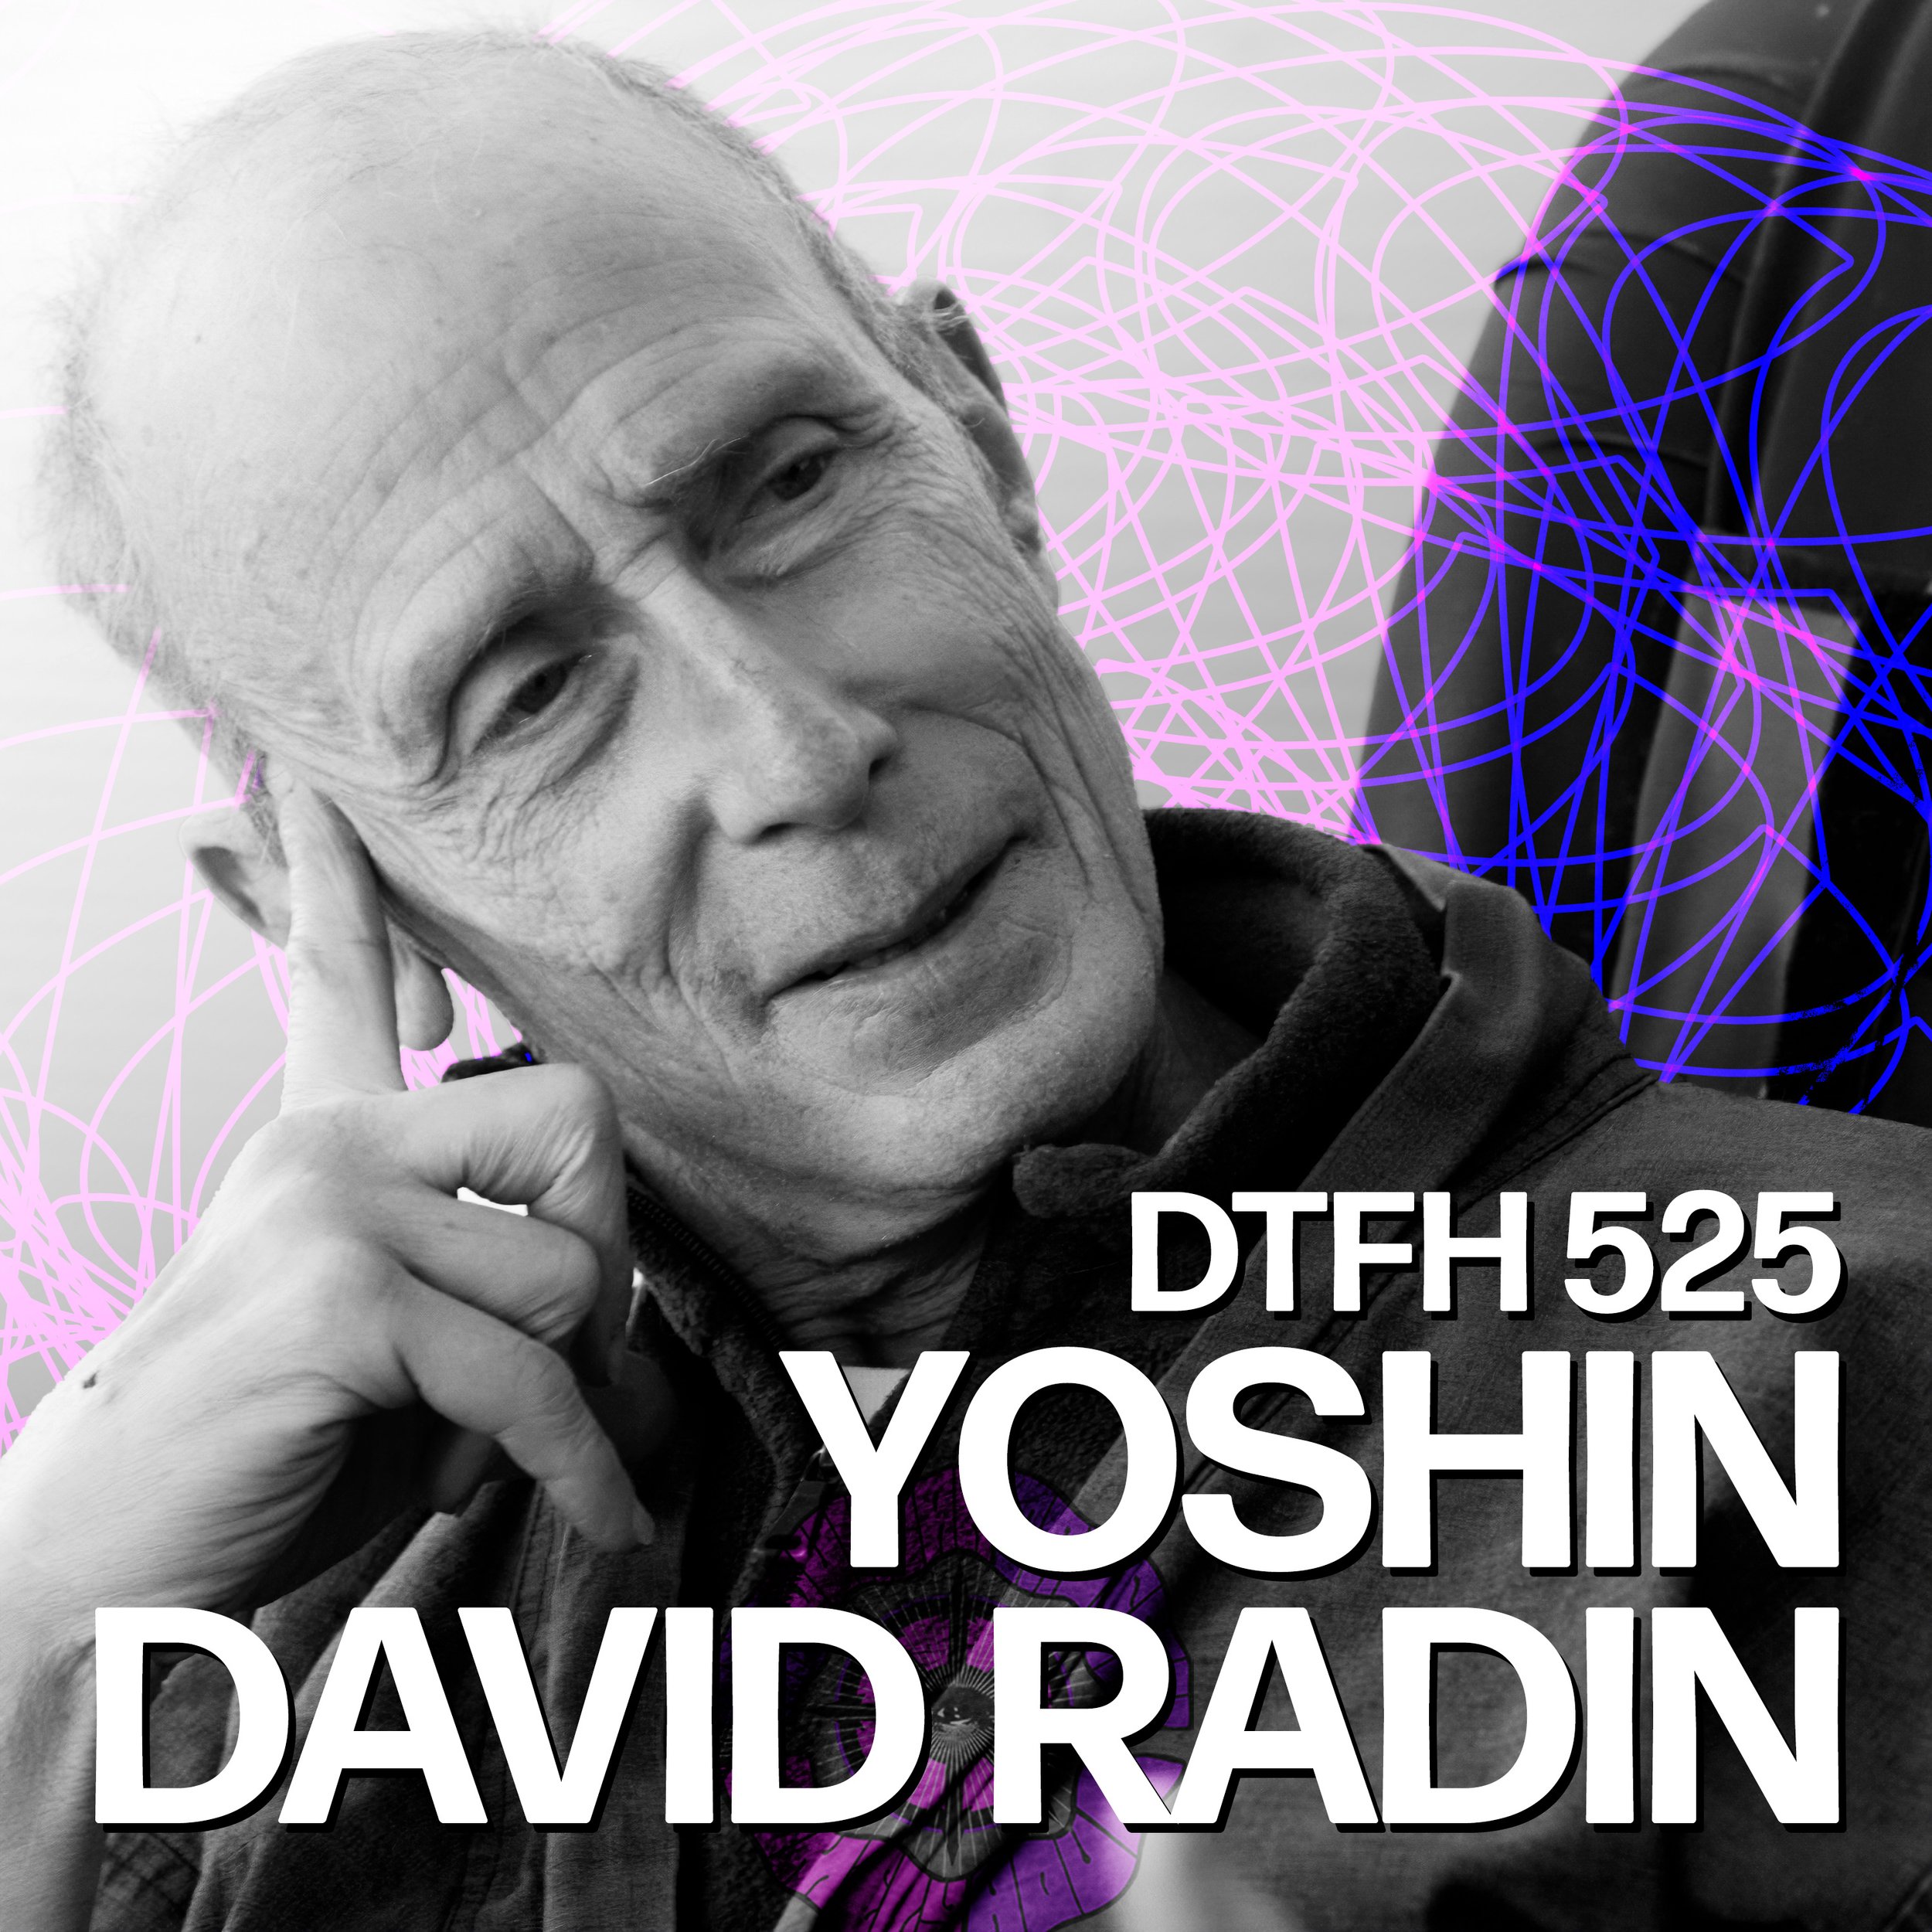 Yoshin David Radin Duncan Trussell Family Hour